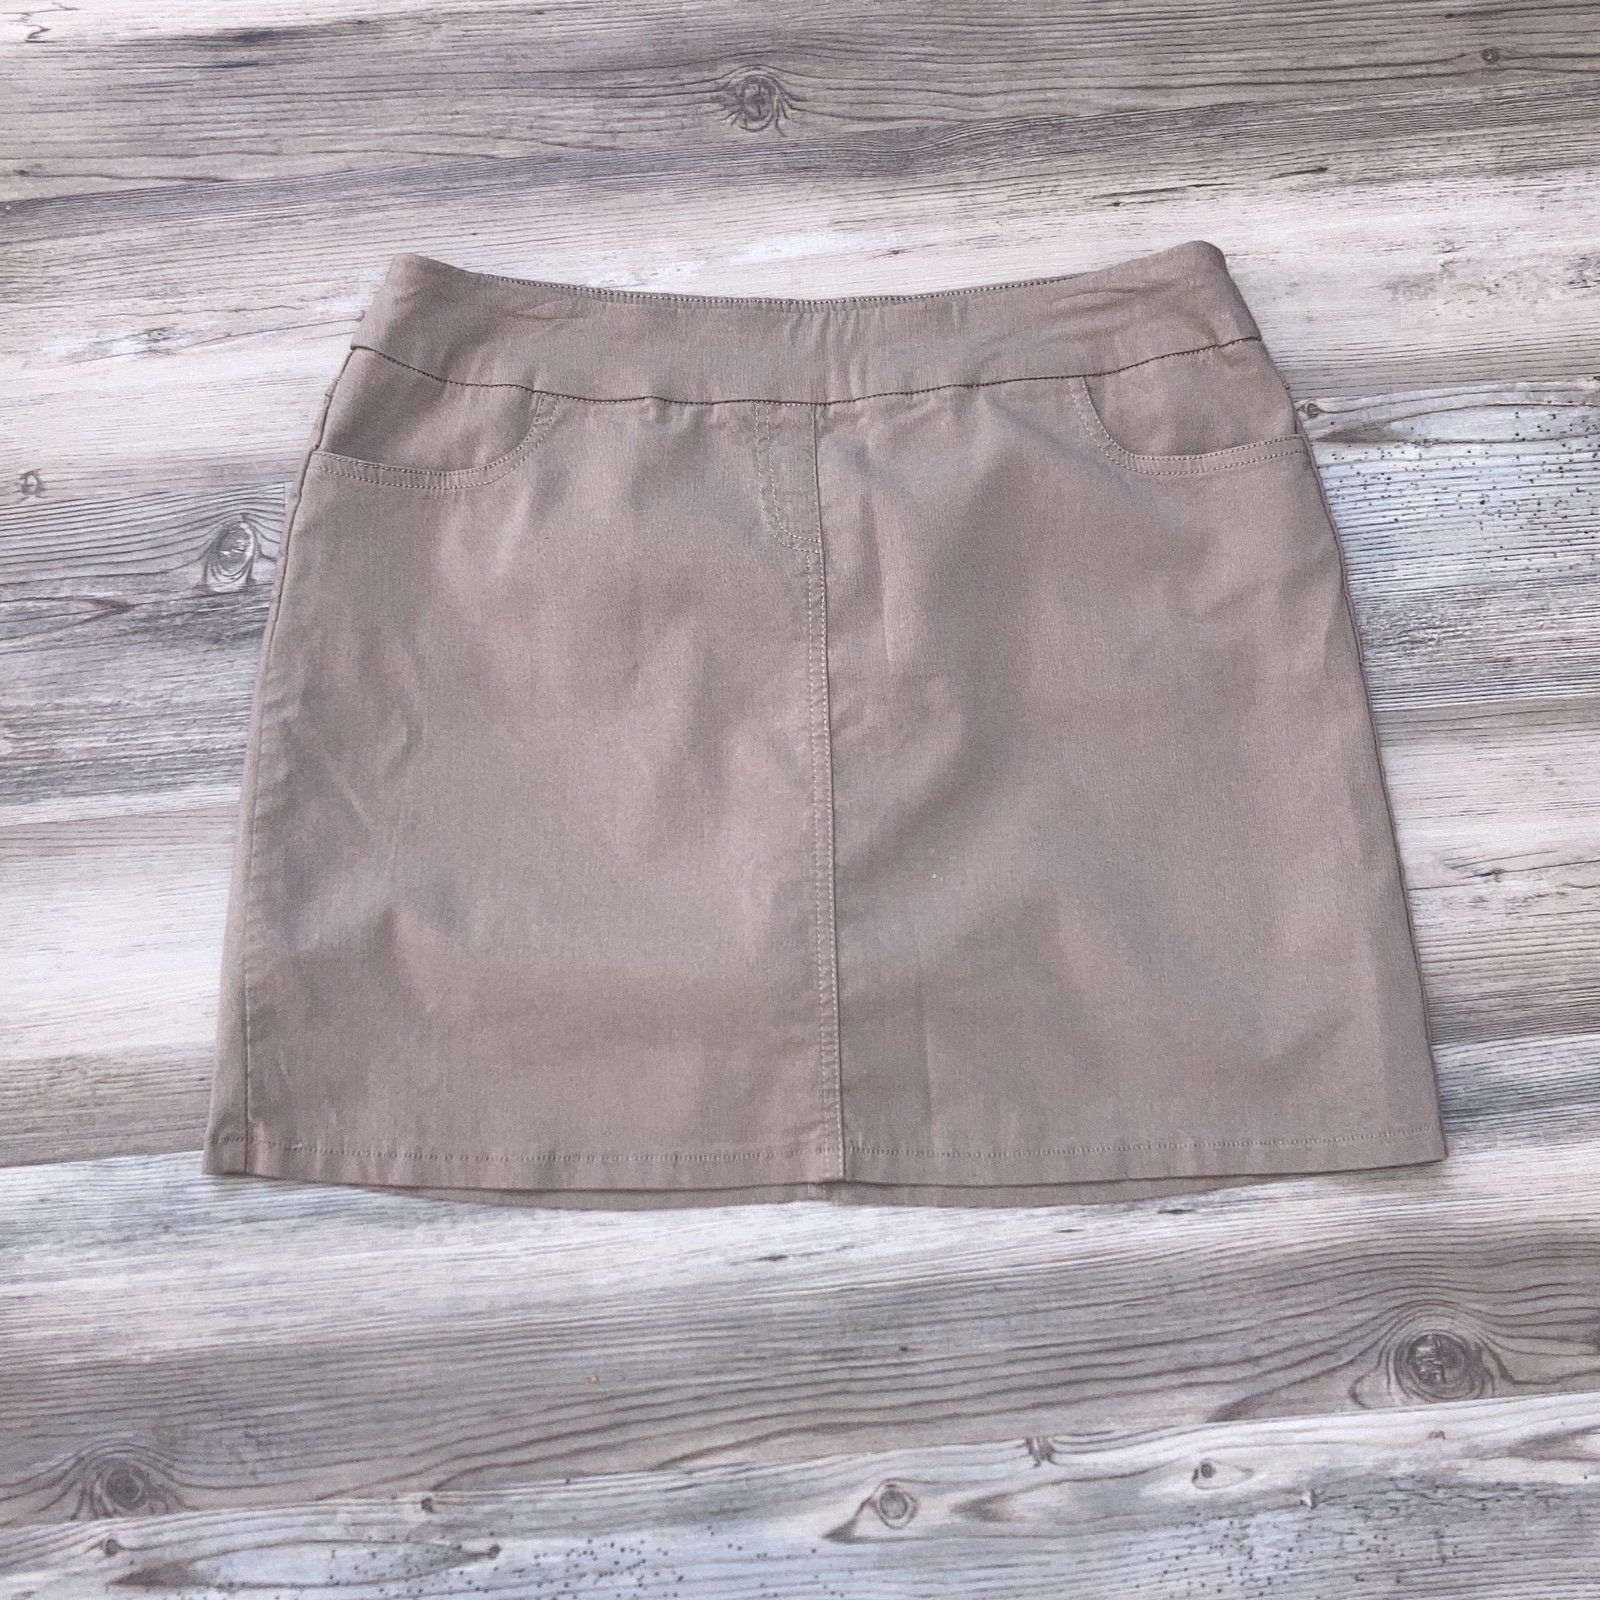 floor price Khaki slim-sation by Multiples golf skirt skort ladies size 12 hWa6pc1Jm Wholesale